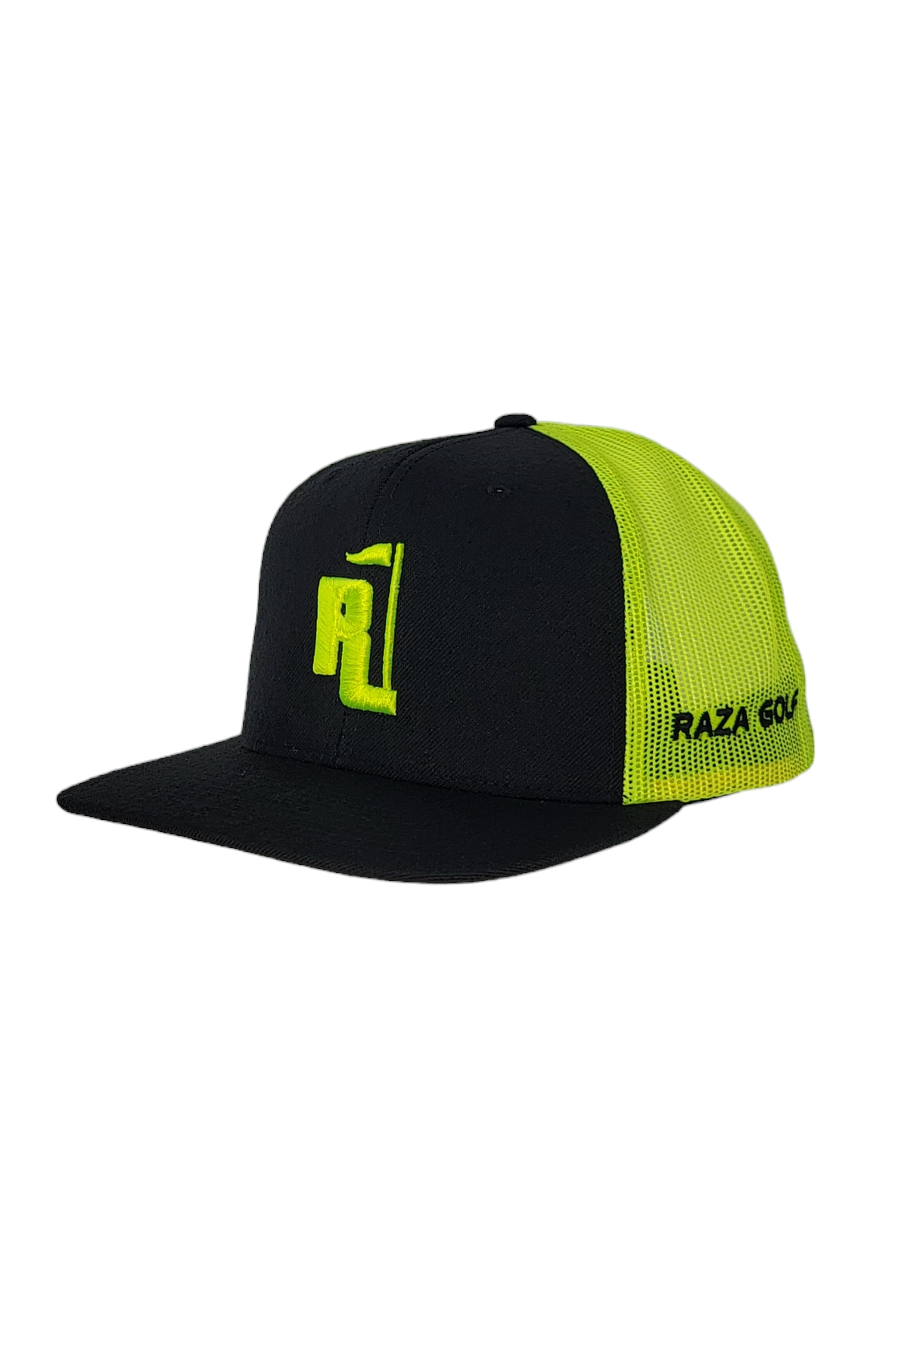 Raza Golf Black/Neon Lime Green Trucker Hat